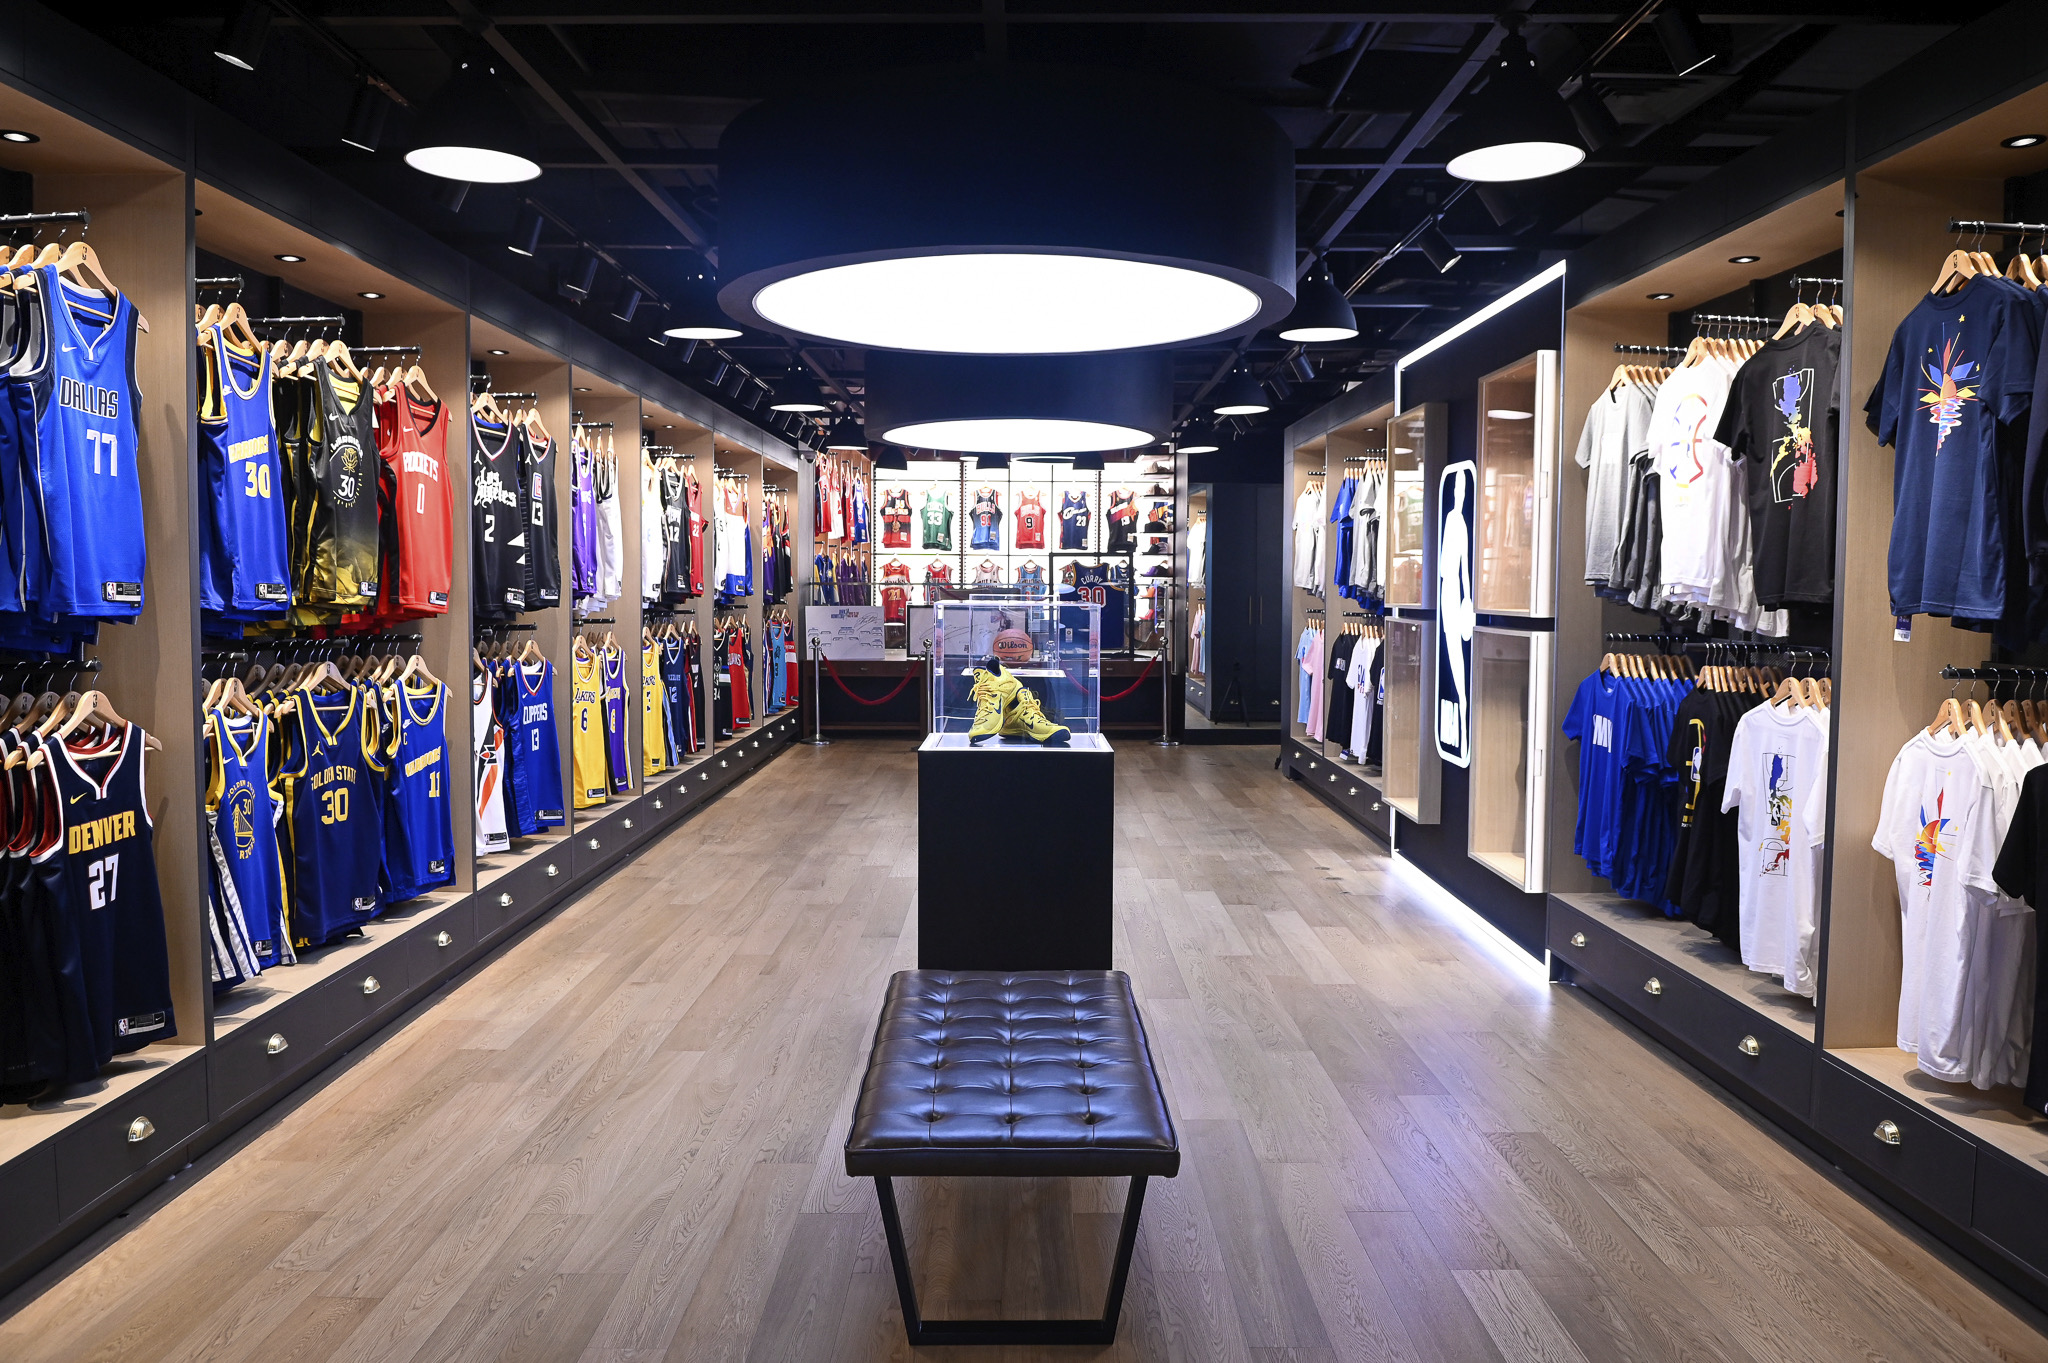 NBA Store, SM Megamall 